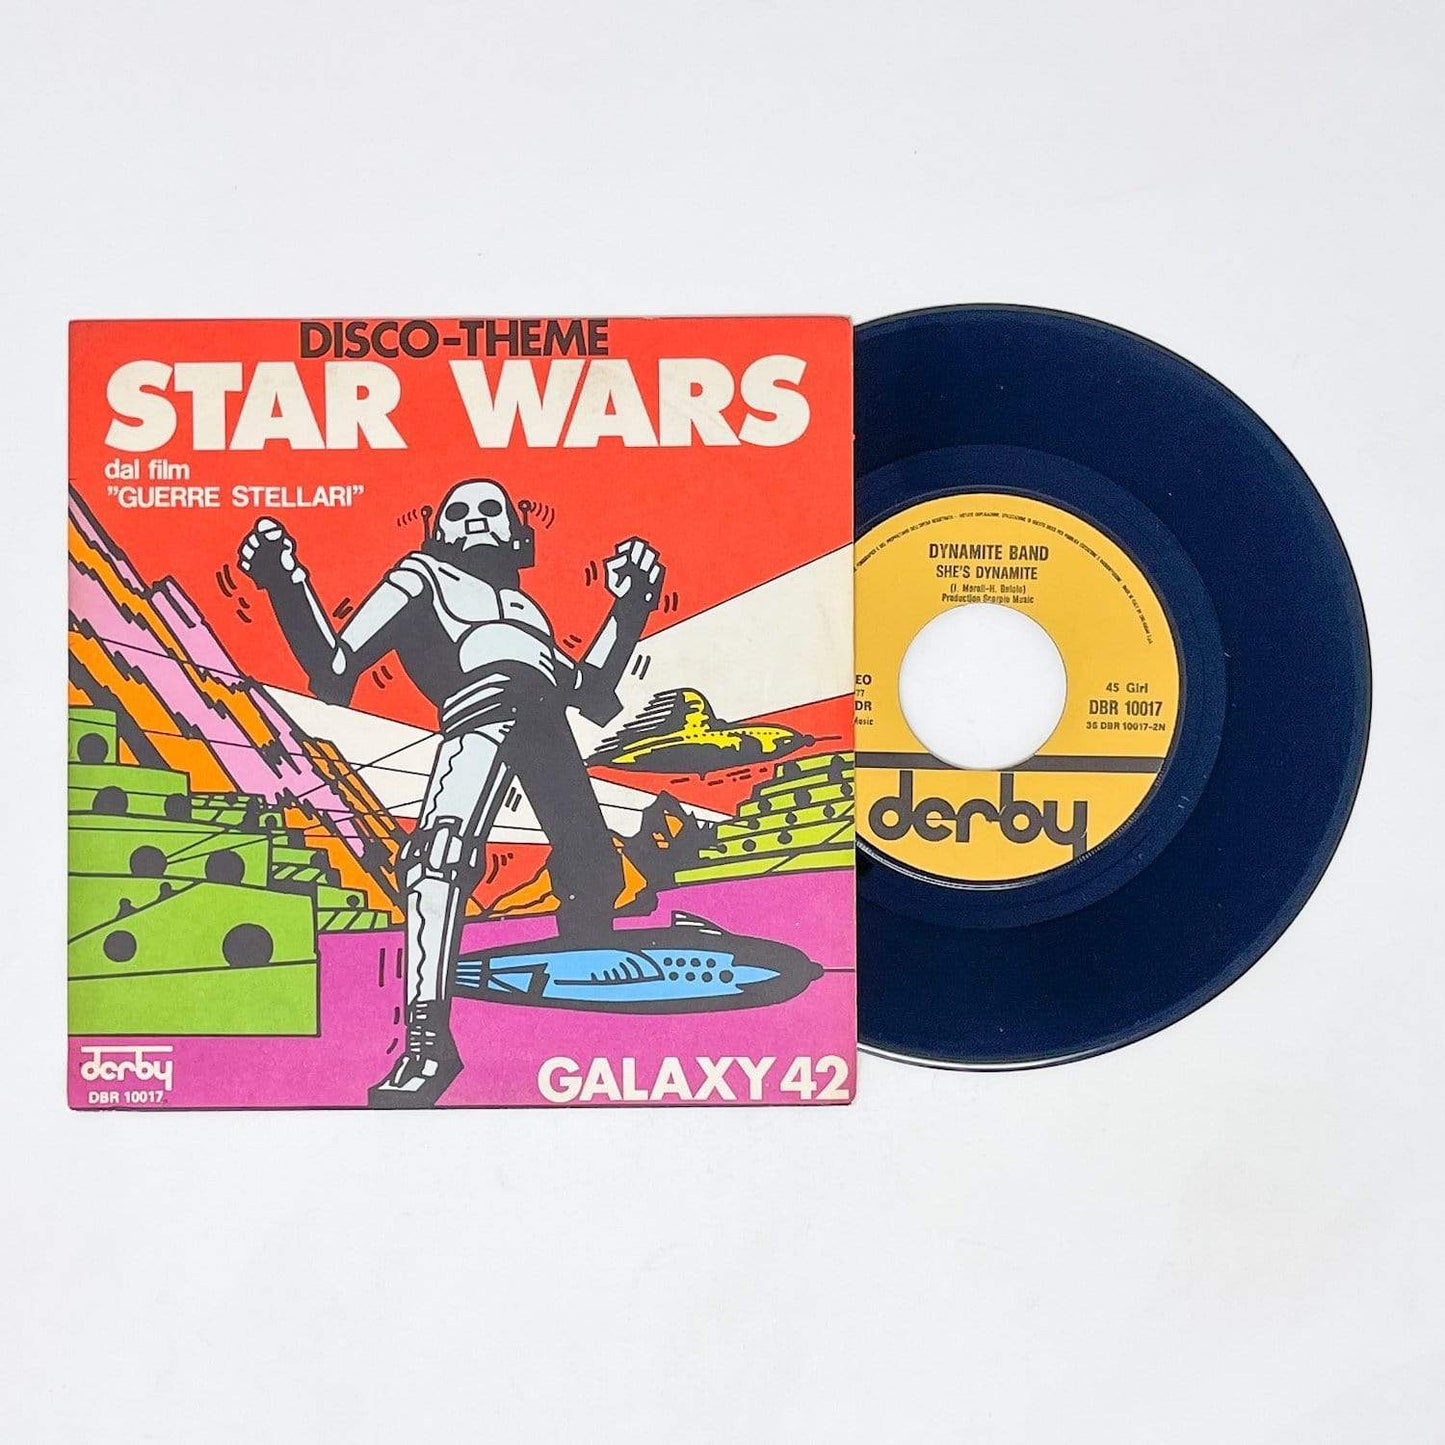 Vintage Foreign Vinyl Star Wars Non-Toy Star Wars Disco Theme 7" Record - Galaxy 42 - Italy (1977)